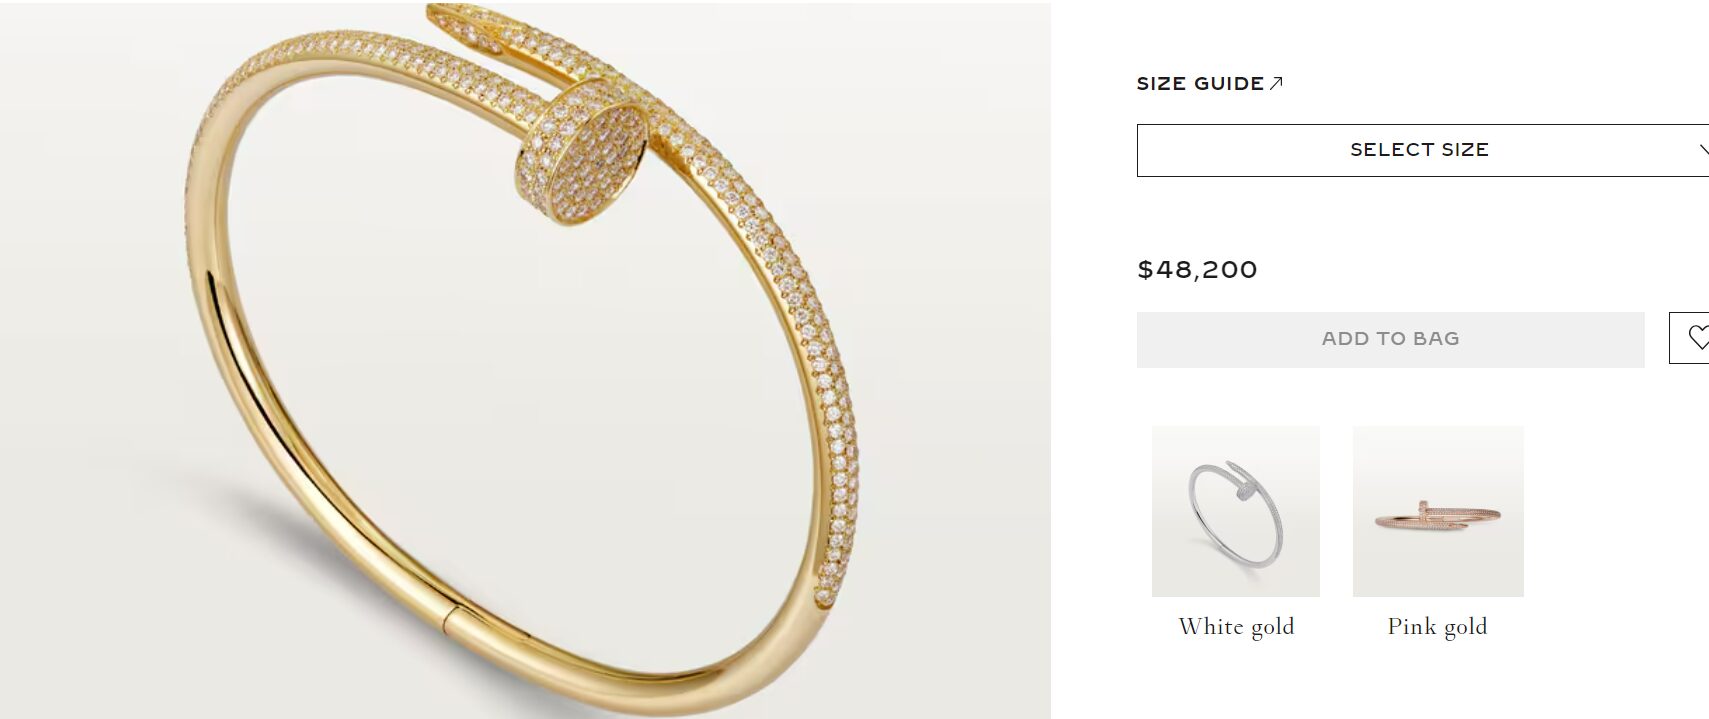 Price tag of the gold bracelet